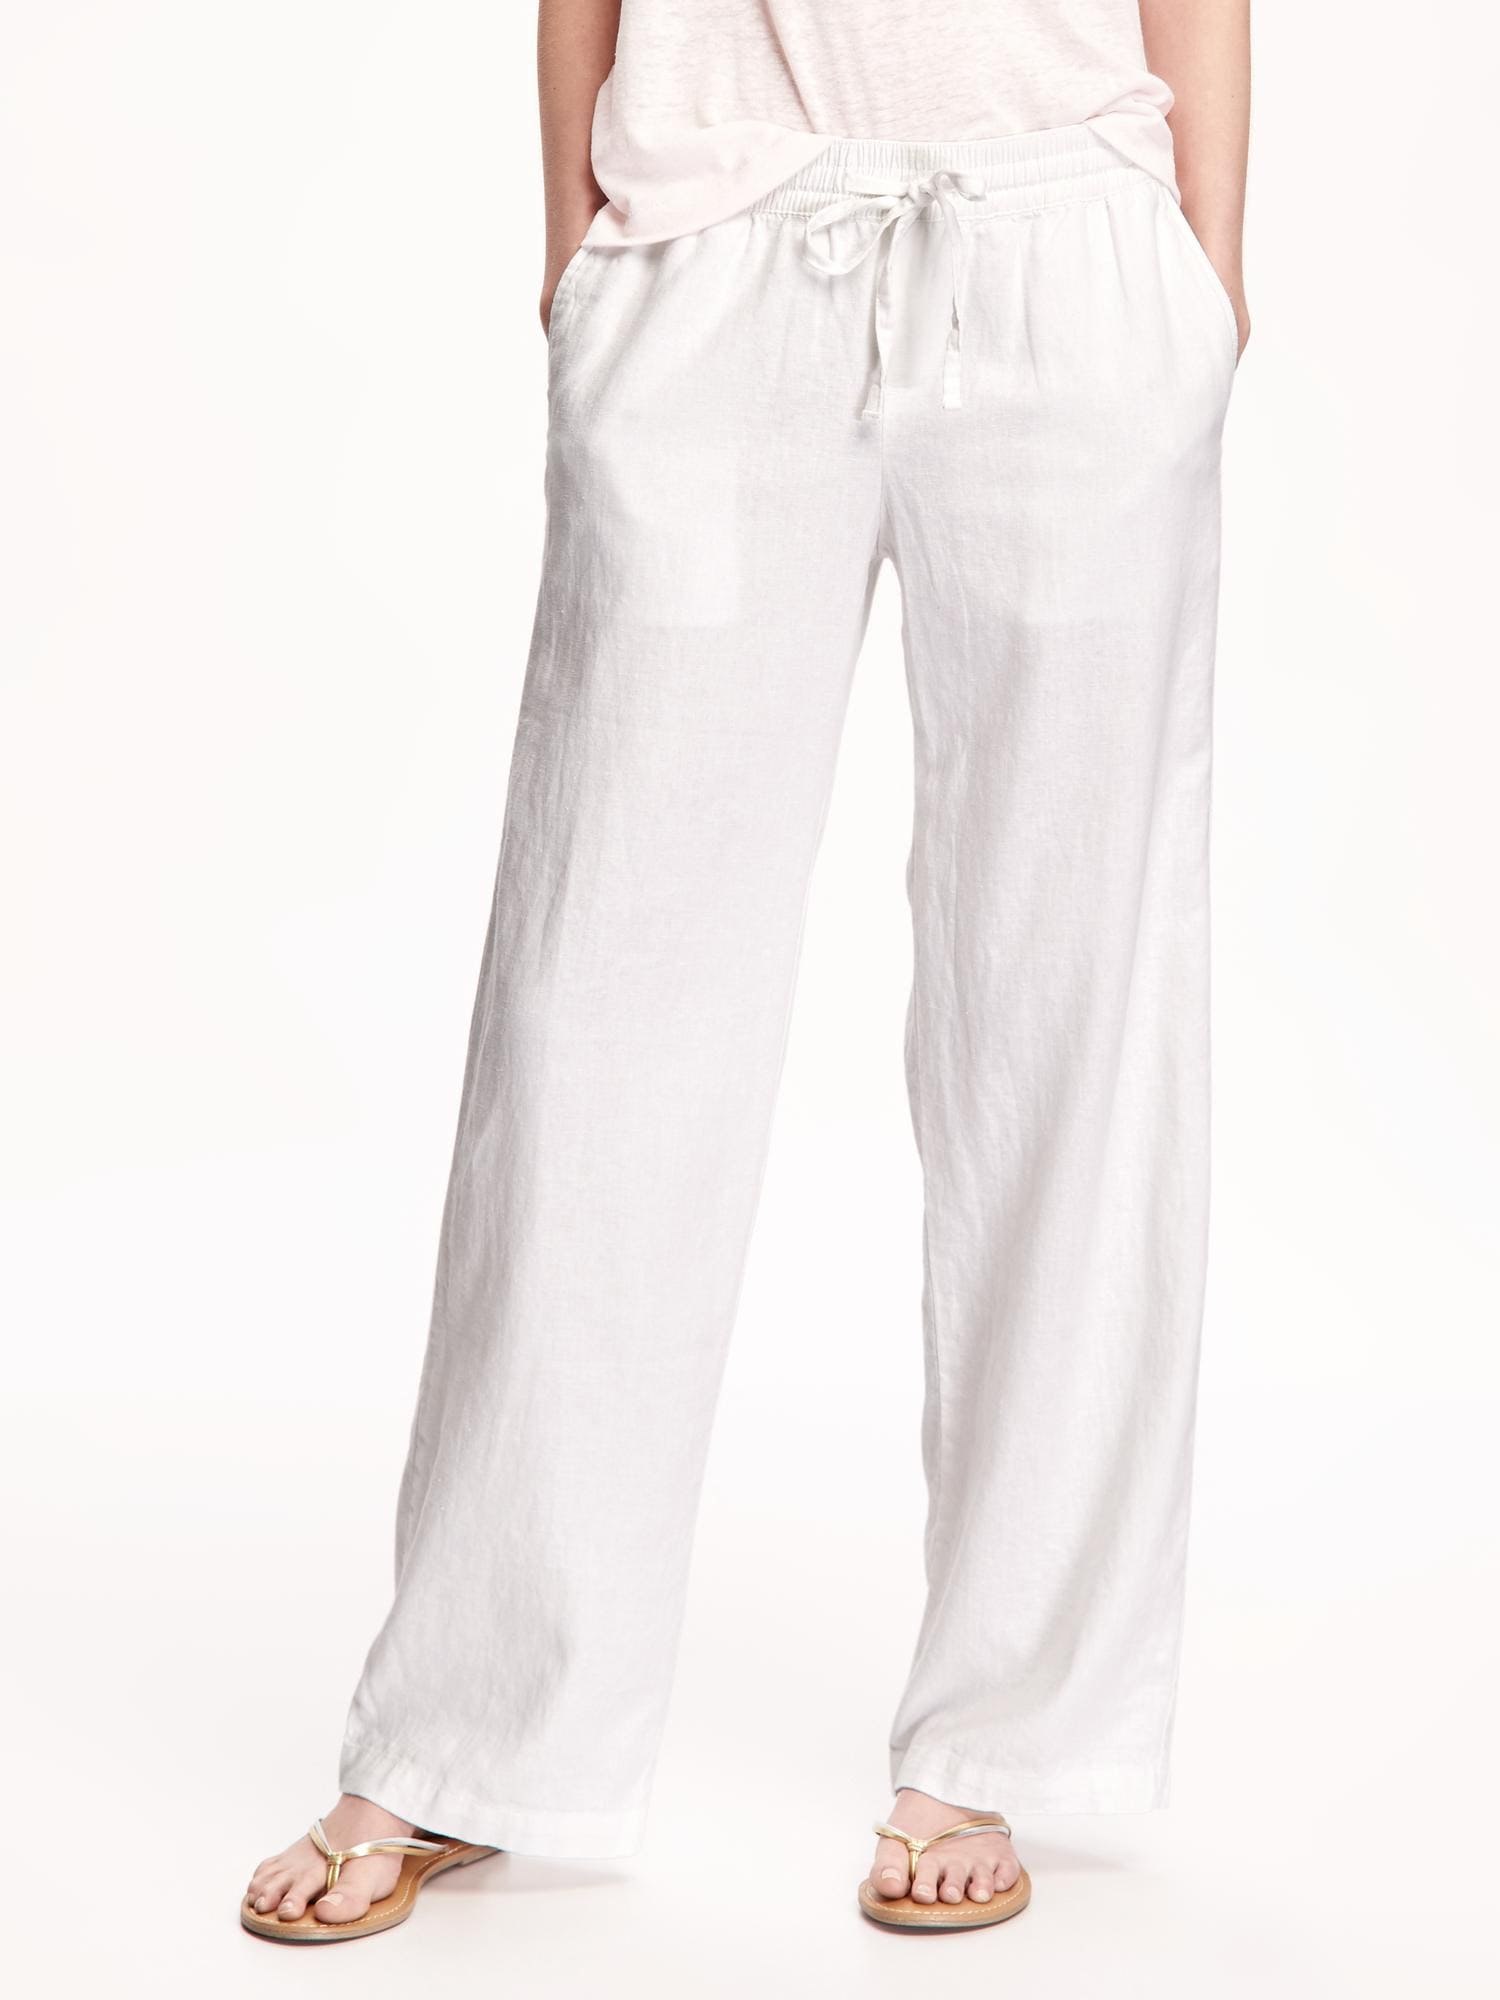 Валберис белые брюки. Брюки Muzzo модель MZ-025 из льна. Uterque льняные брюки женские. Остин льняные брюки женские 2021. Белые льняные брюки Mexx.